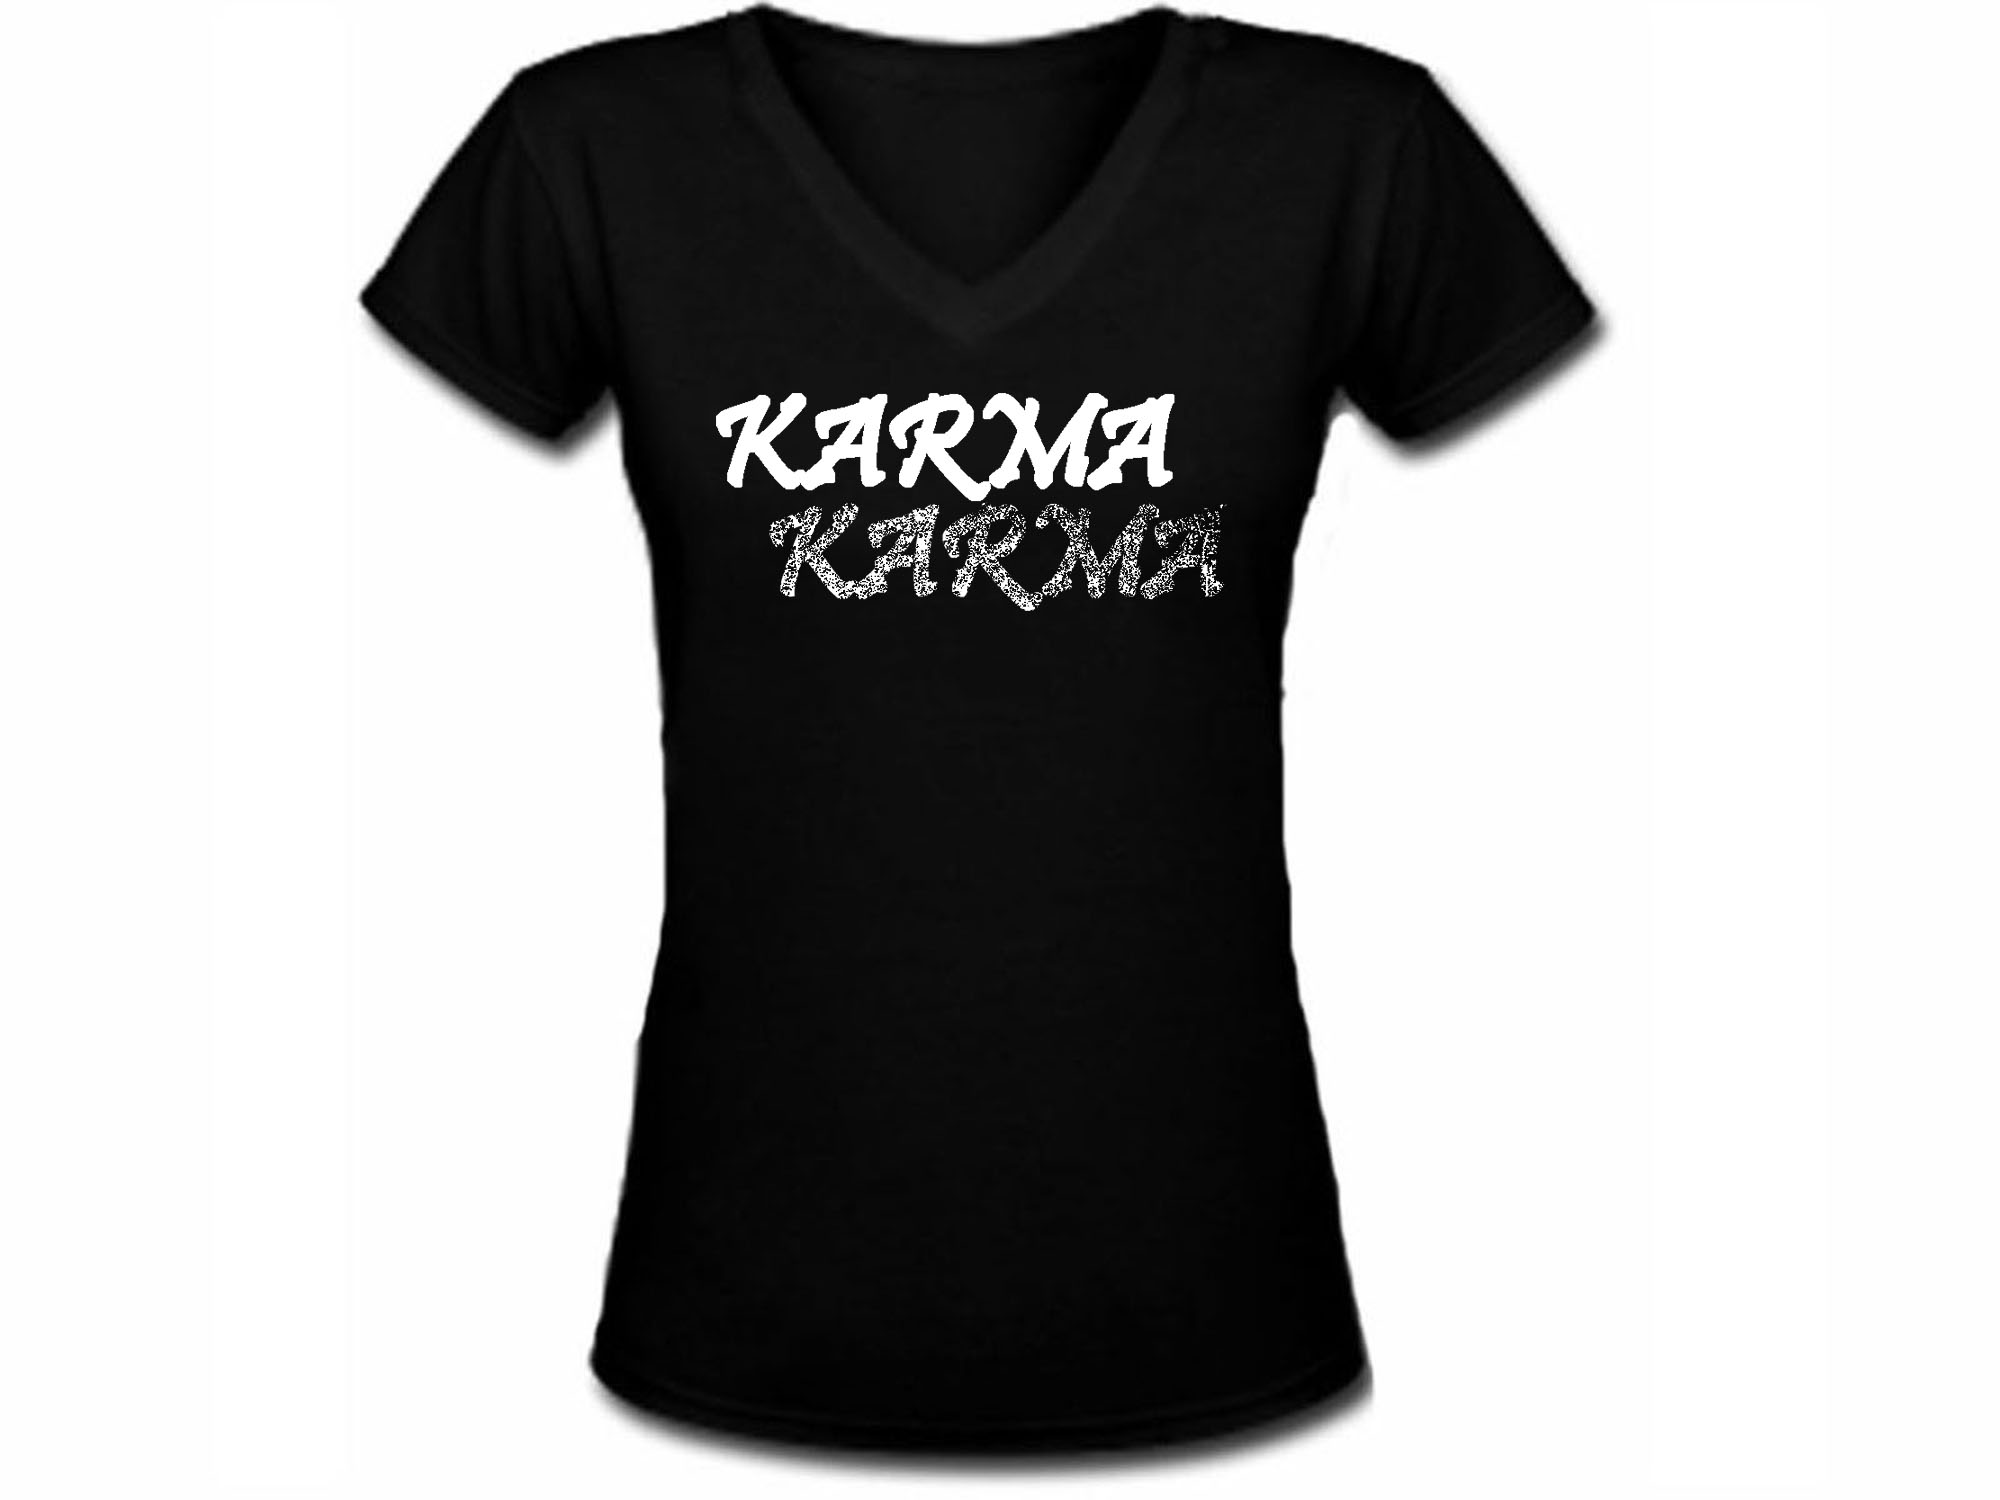 Karma yoga wear meditation woman girls black t shirt